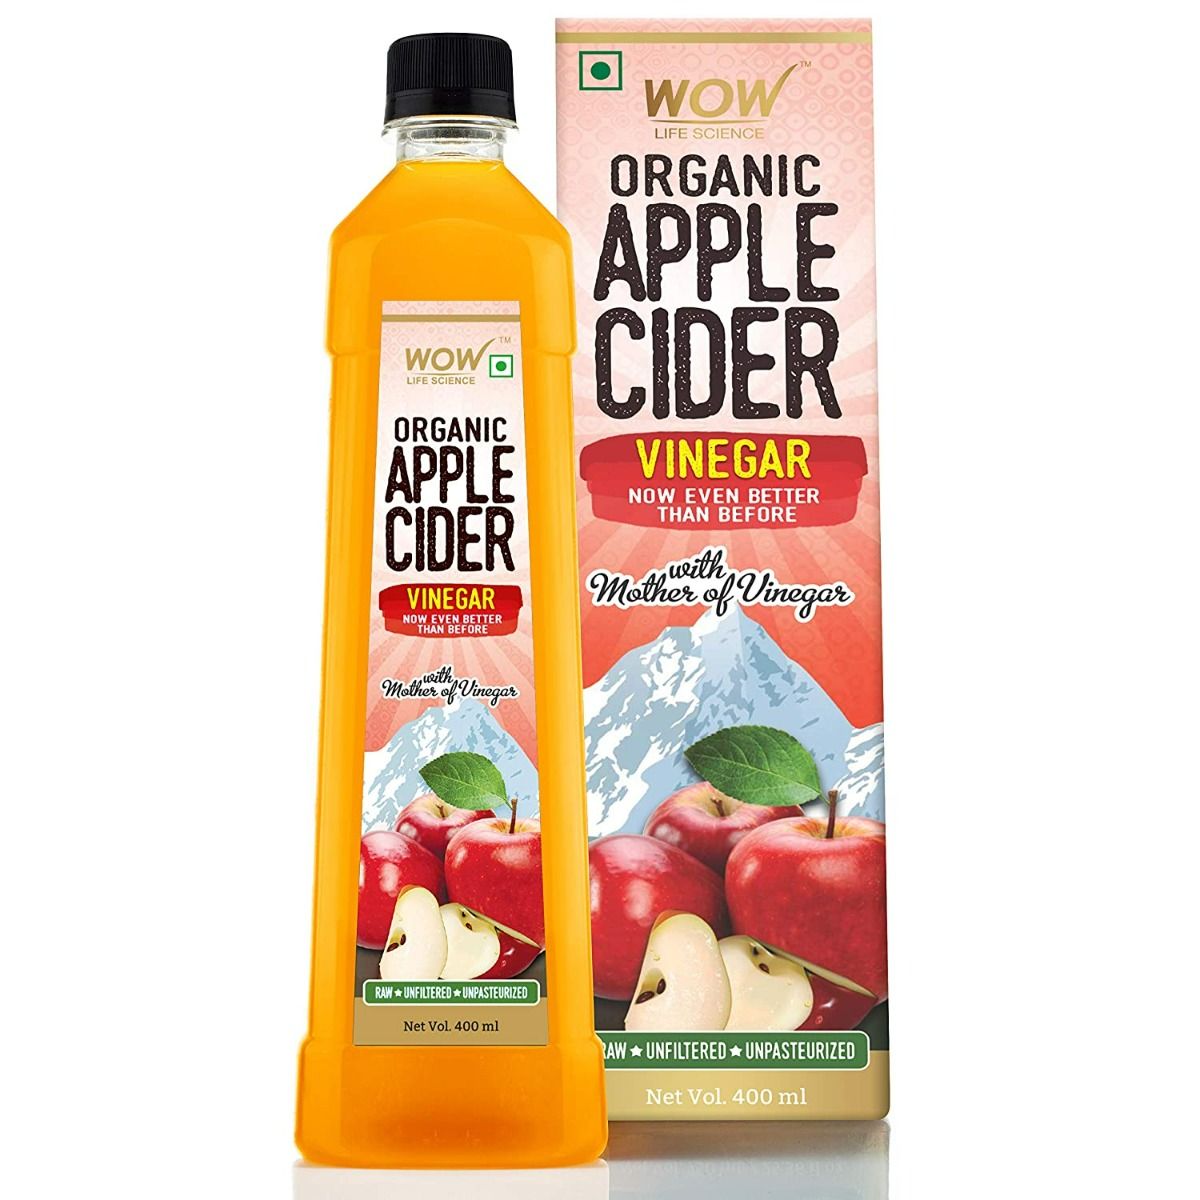 Buy Wow Life Science Organic Apple Cider Vinegar, 400 ml Online